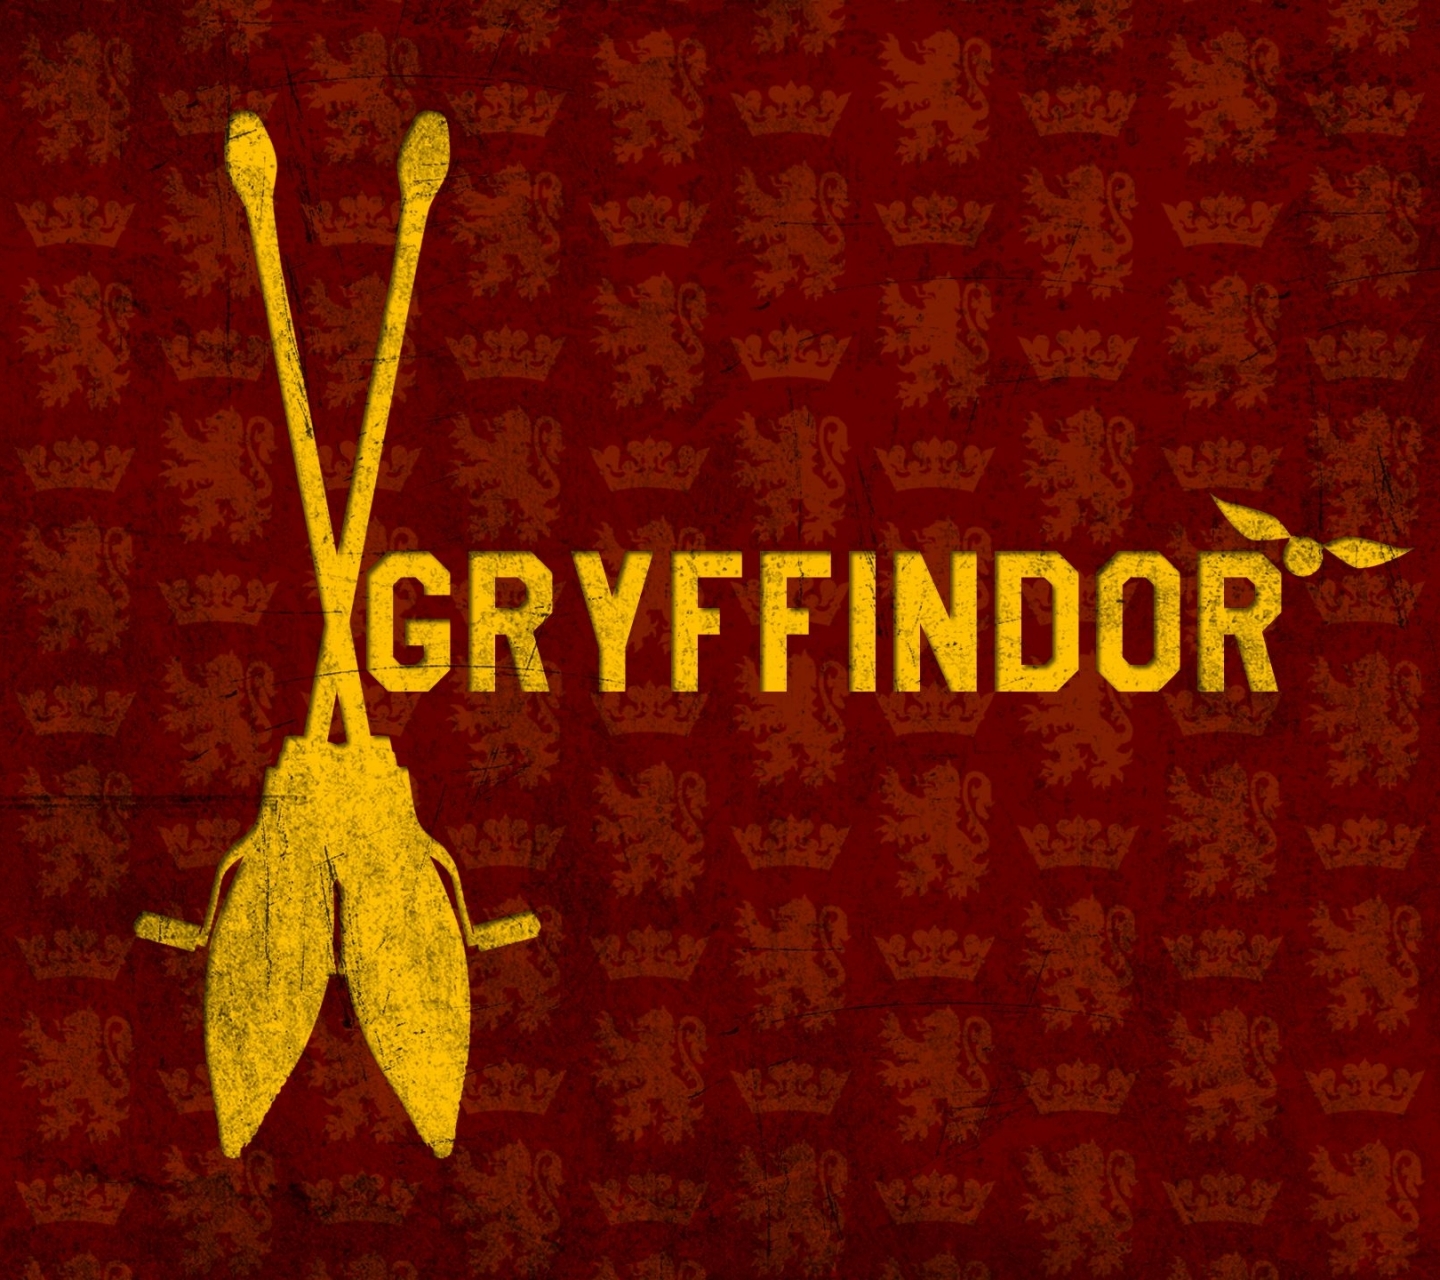 Gryffindor wallpaper for desktop, download free Gryffindor picture and background for PC